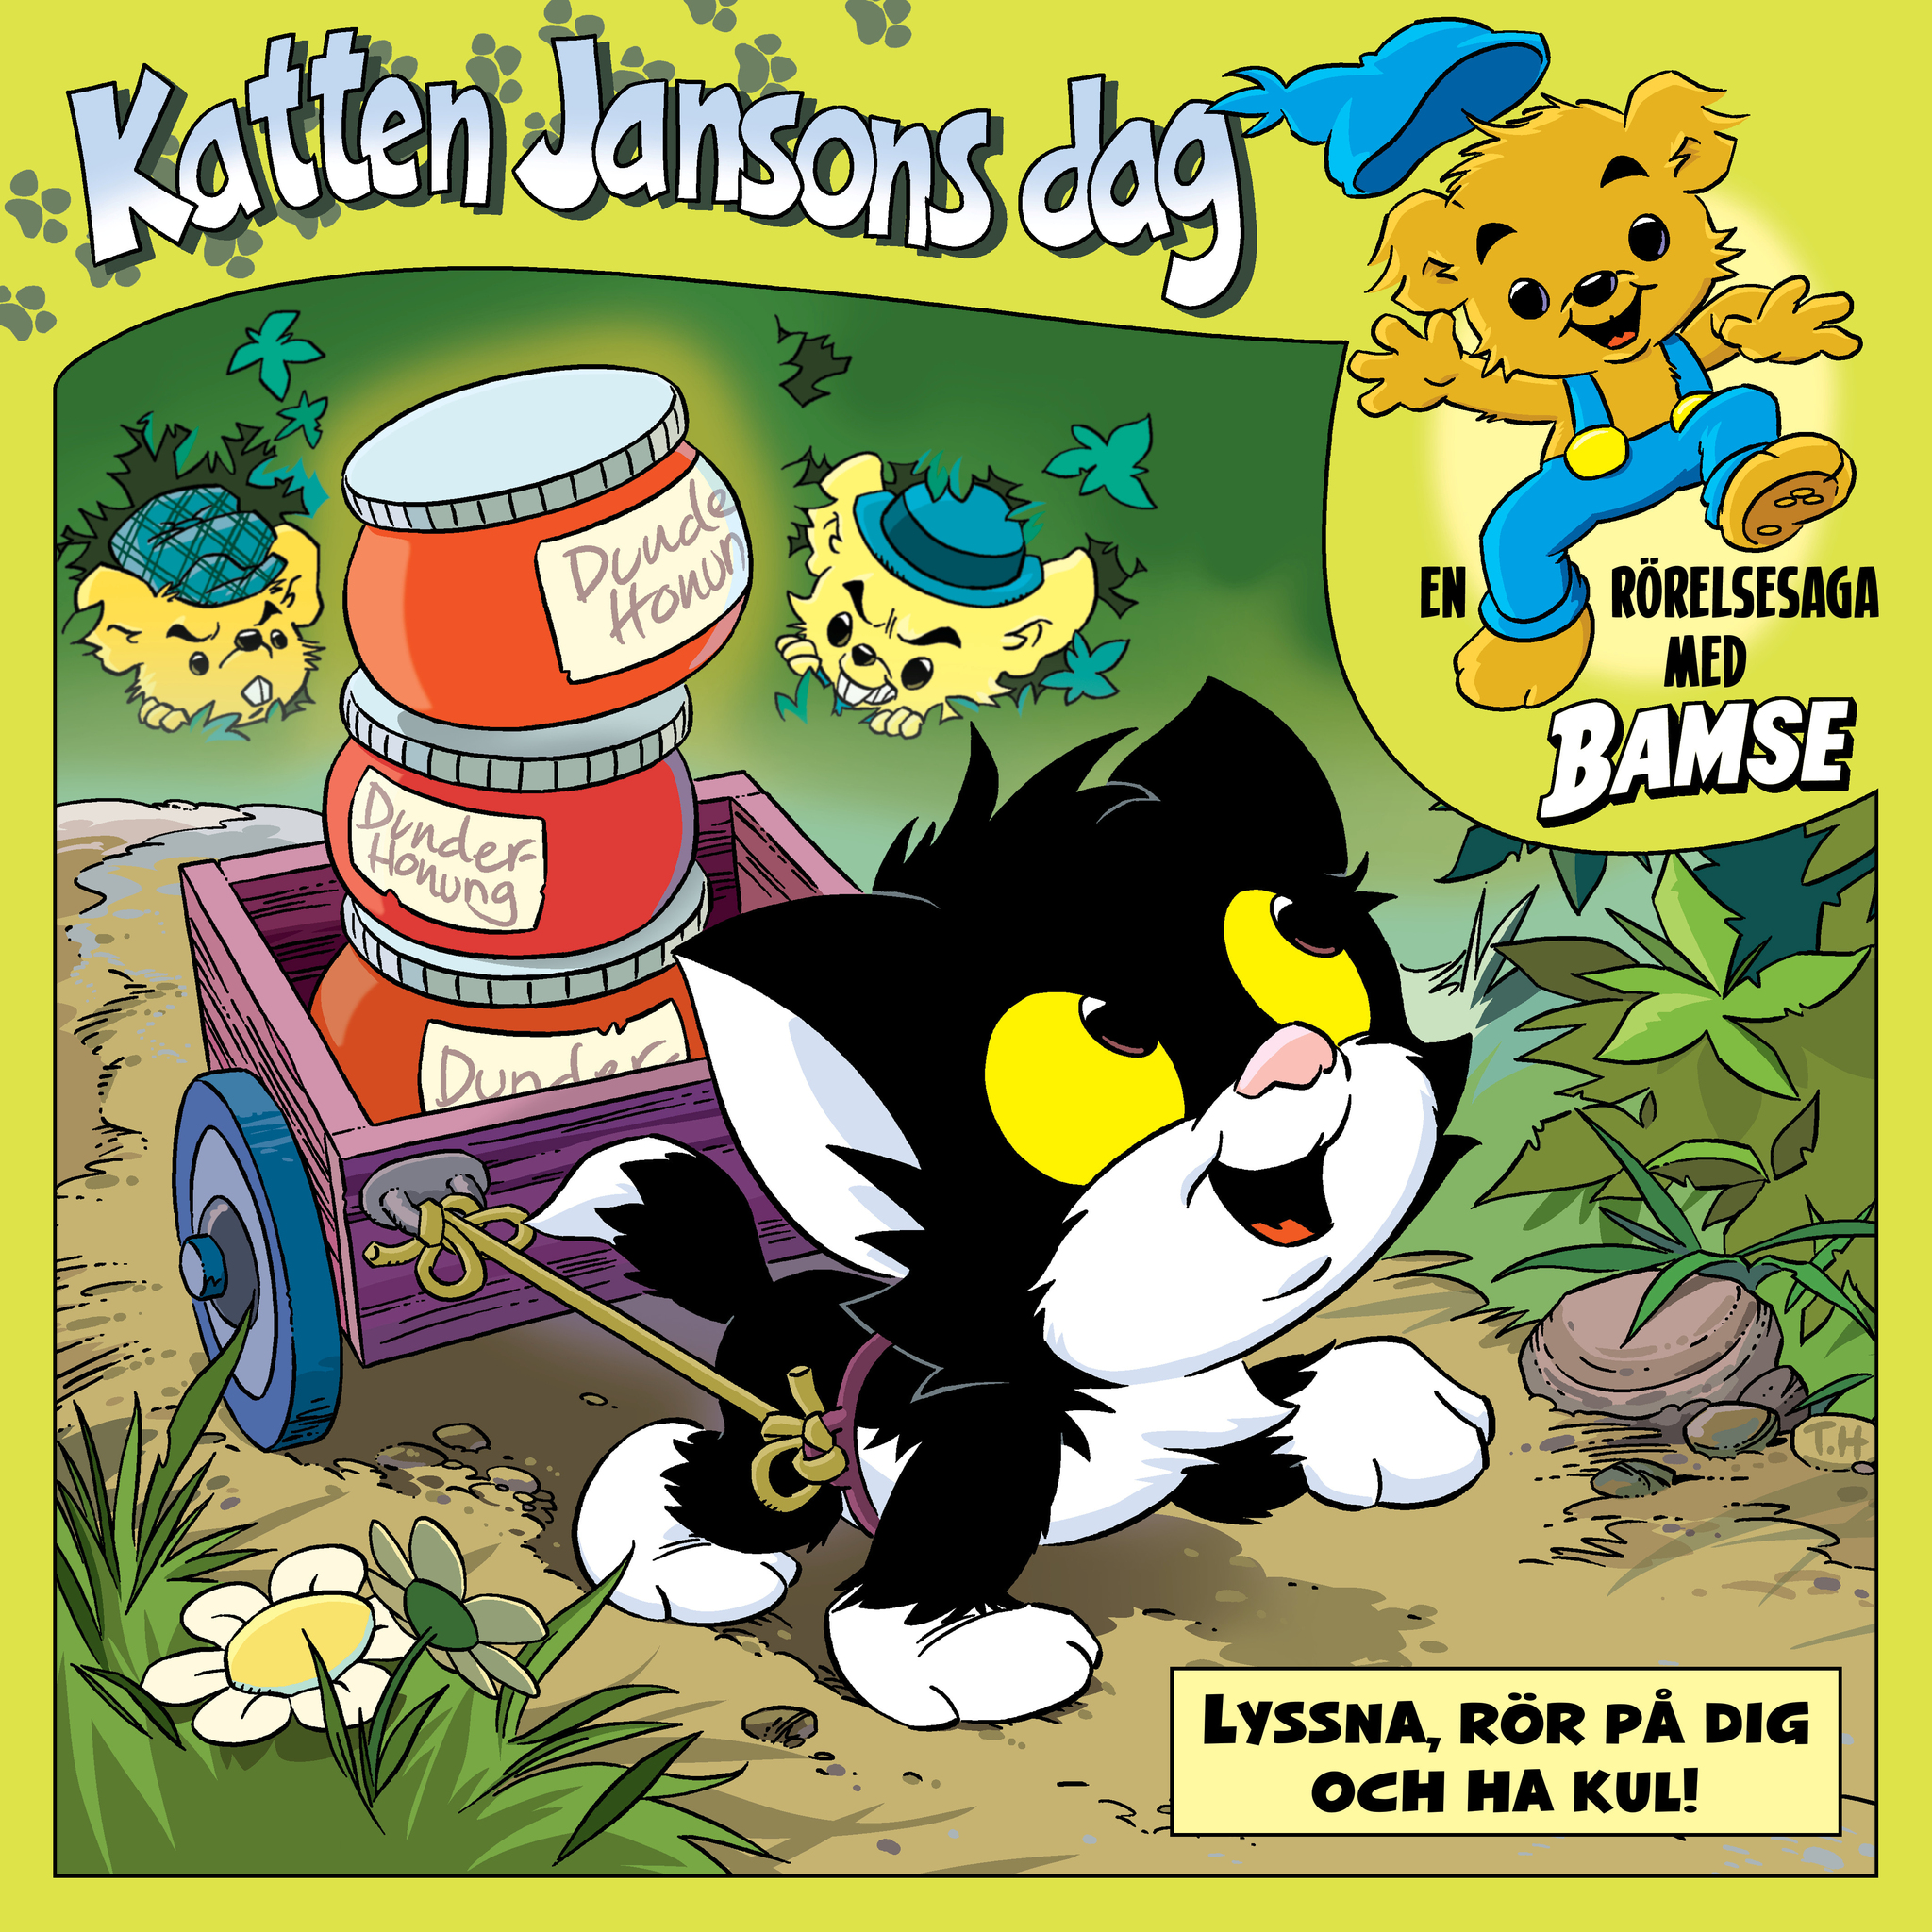 Bamse Katten Jansons dag Bok: En rörelsesaga